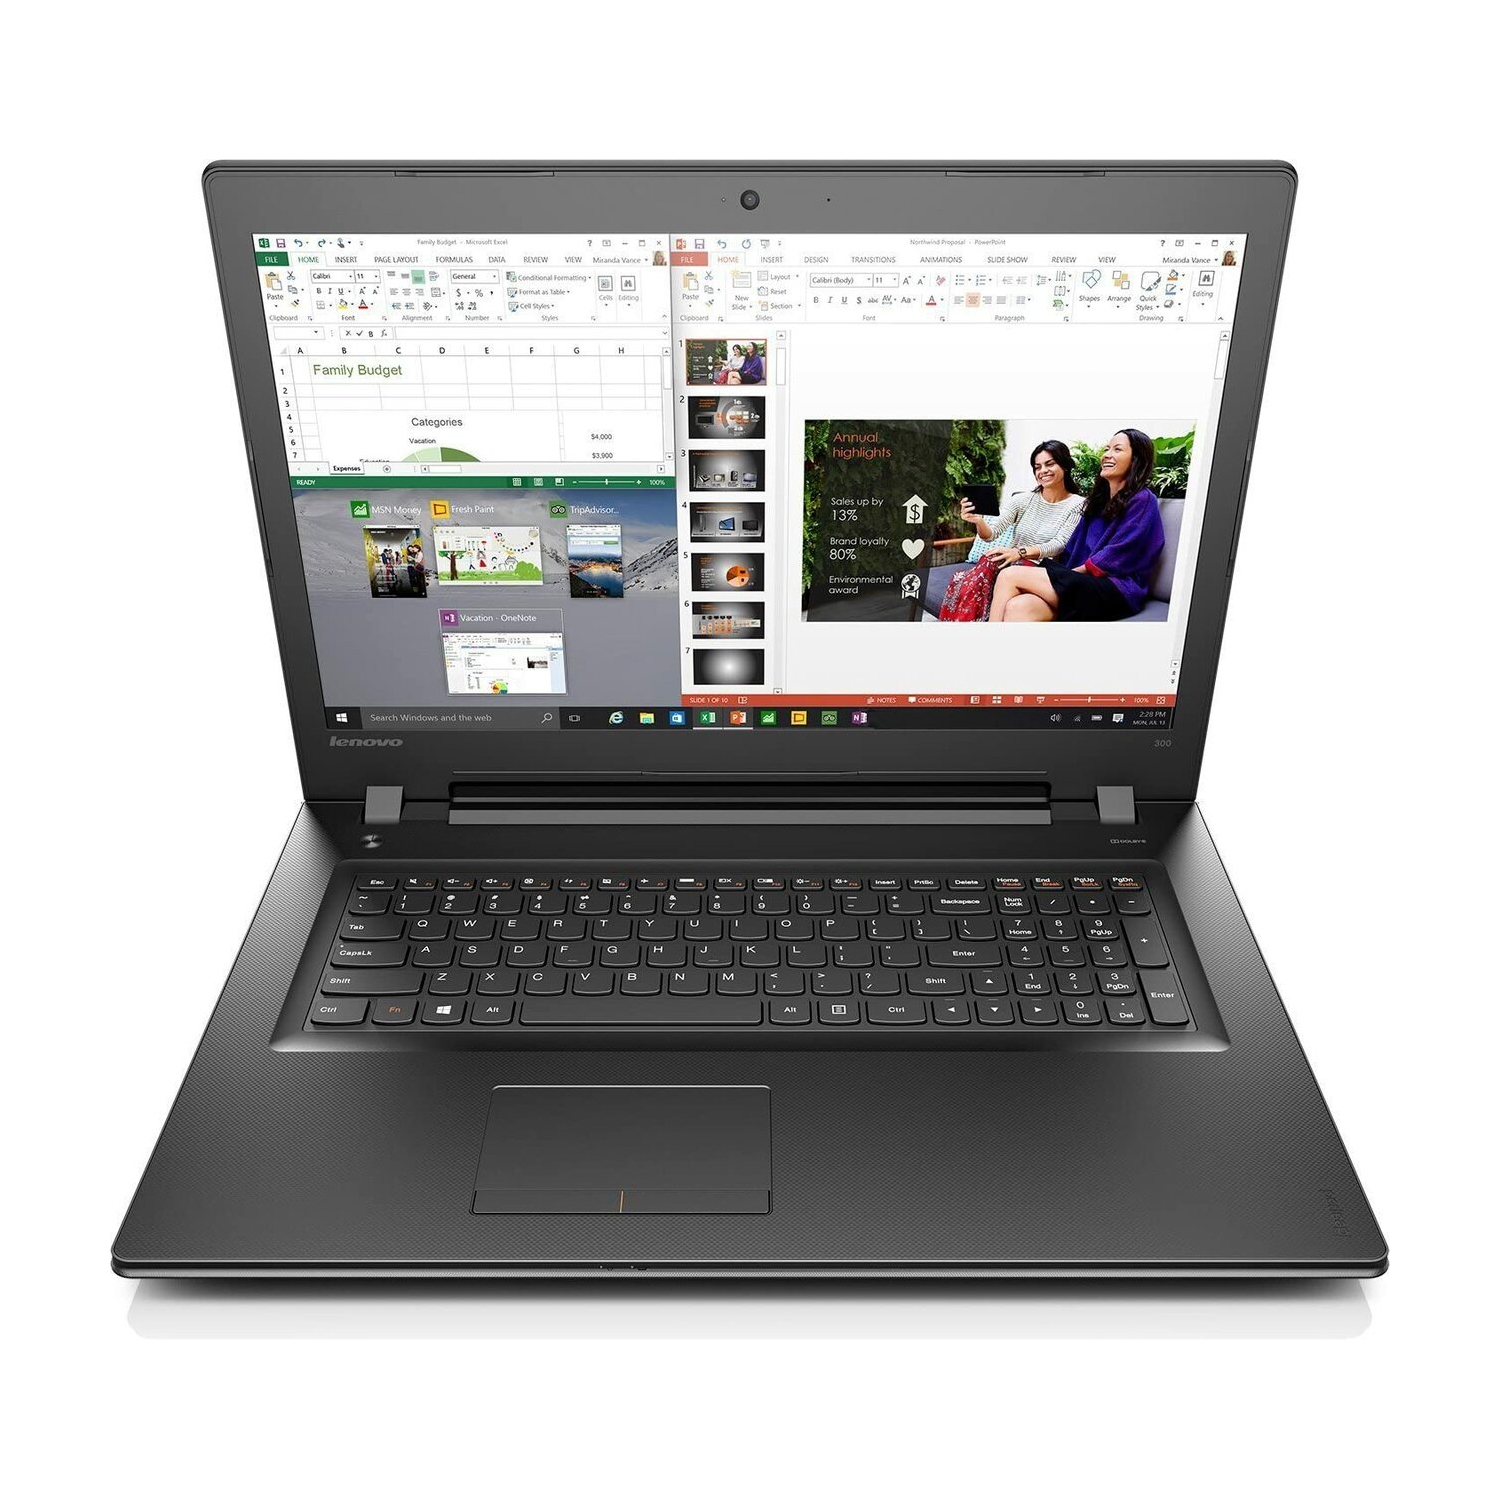 Refurbished (Good) - Lenovo Ideapad 300-17ISK, 17.3" Laptop, Core i3-6100u 6th Gen, 8GB RAM, 1 TB HDD, Windows 10